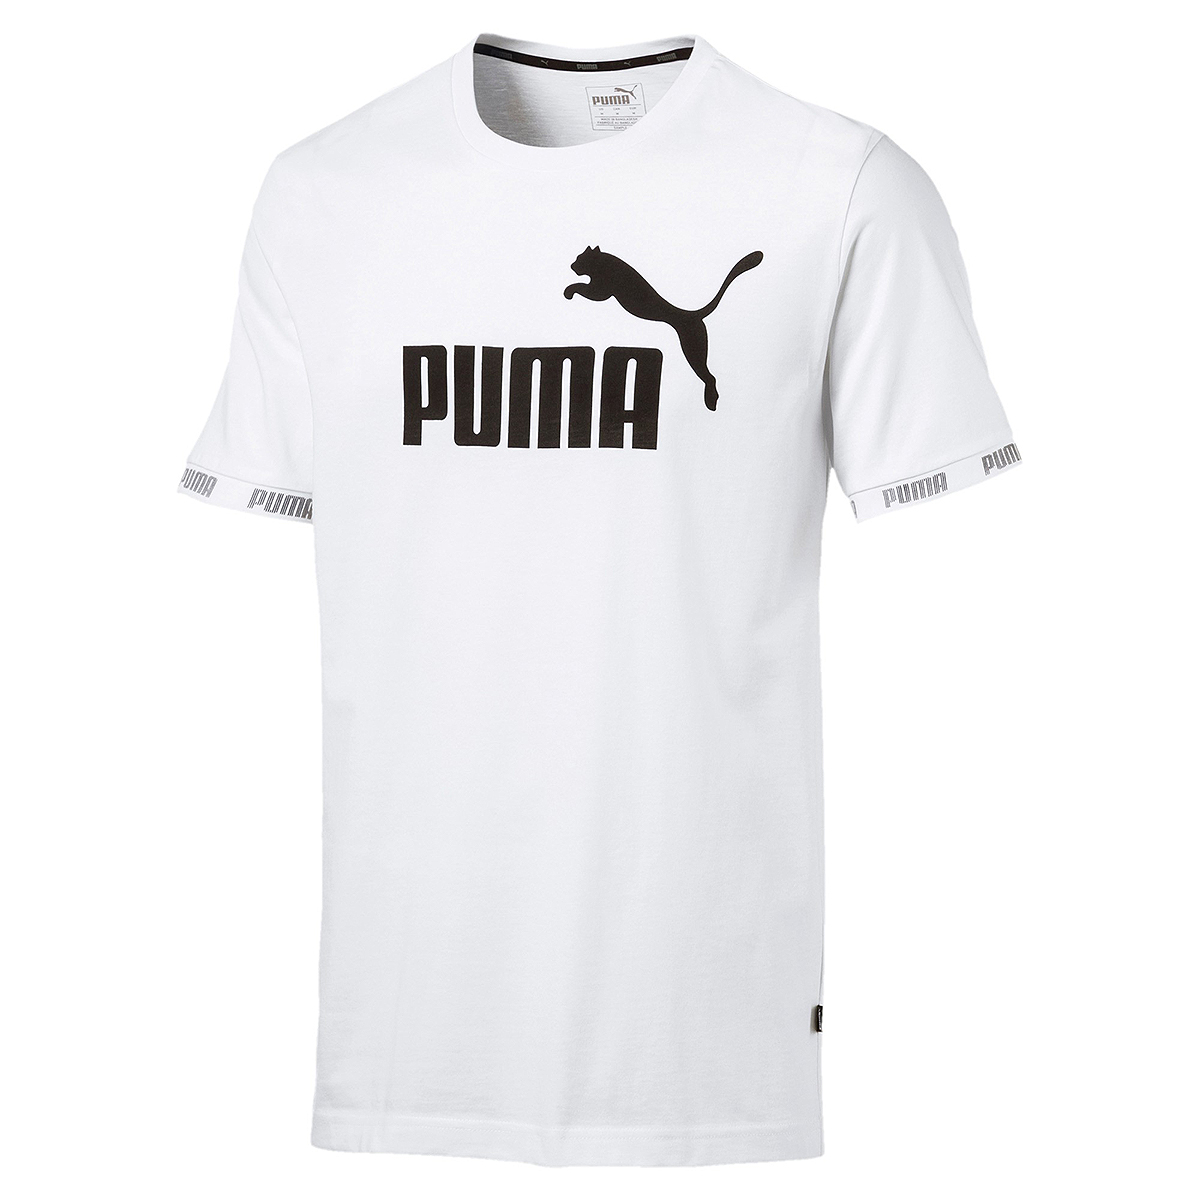 PUMA Herren Amplified Big Logo Tee T-Shirt weiss 854242 02